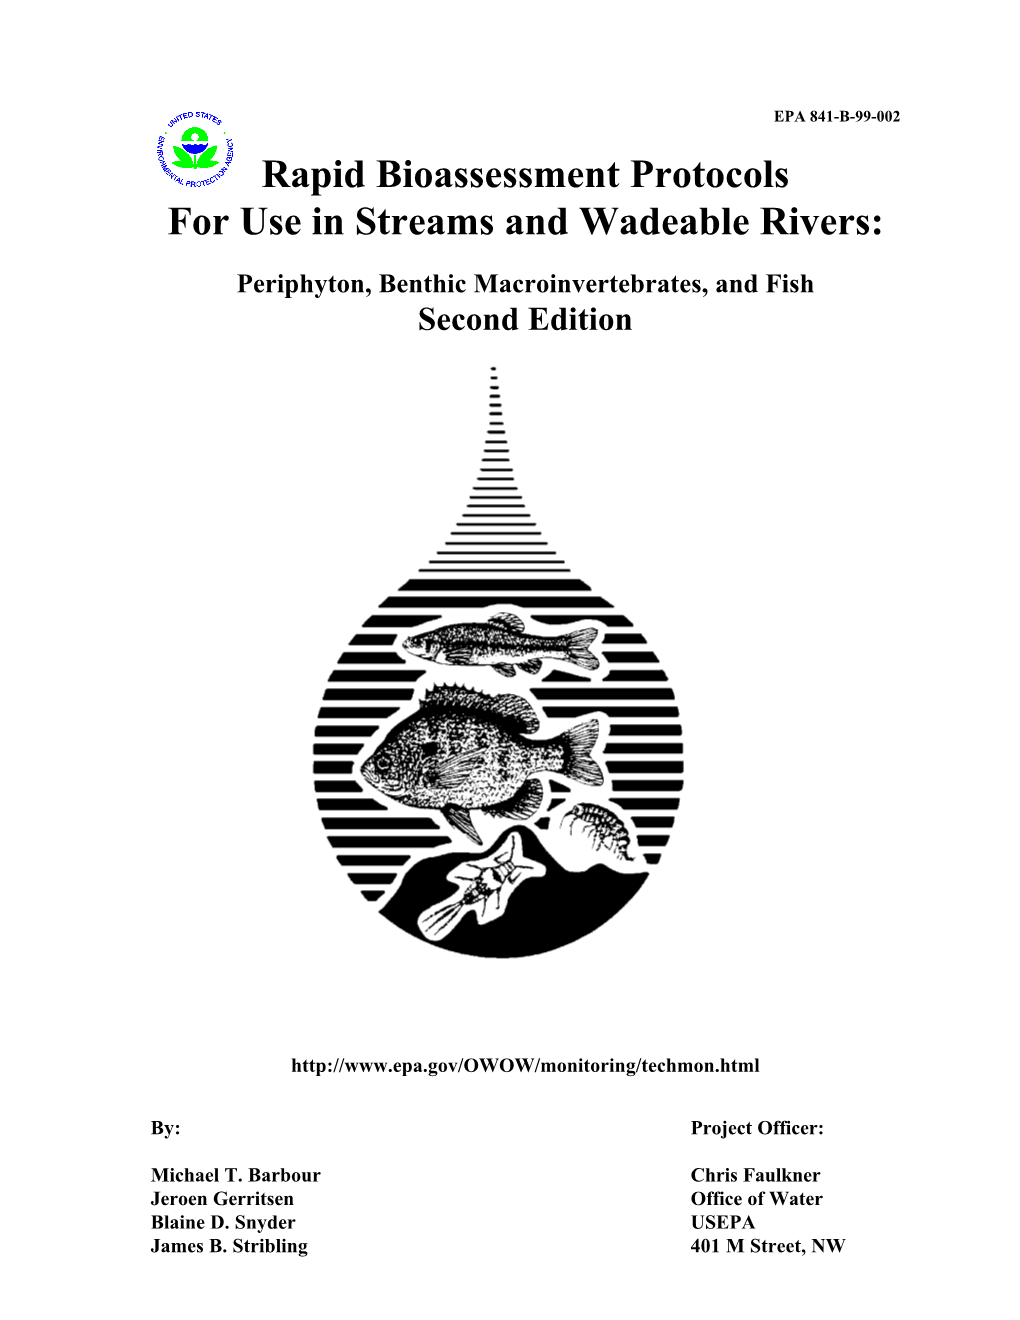 EPA 1999 Rapid Bioassessment Protocol